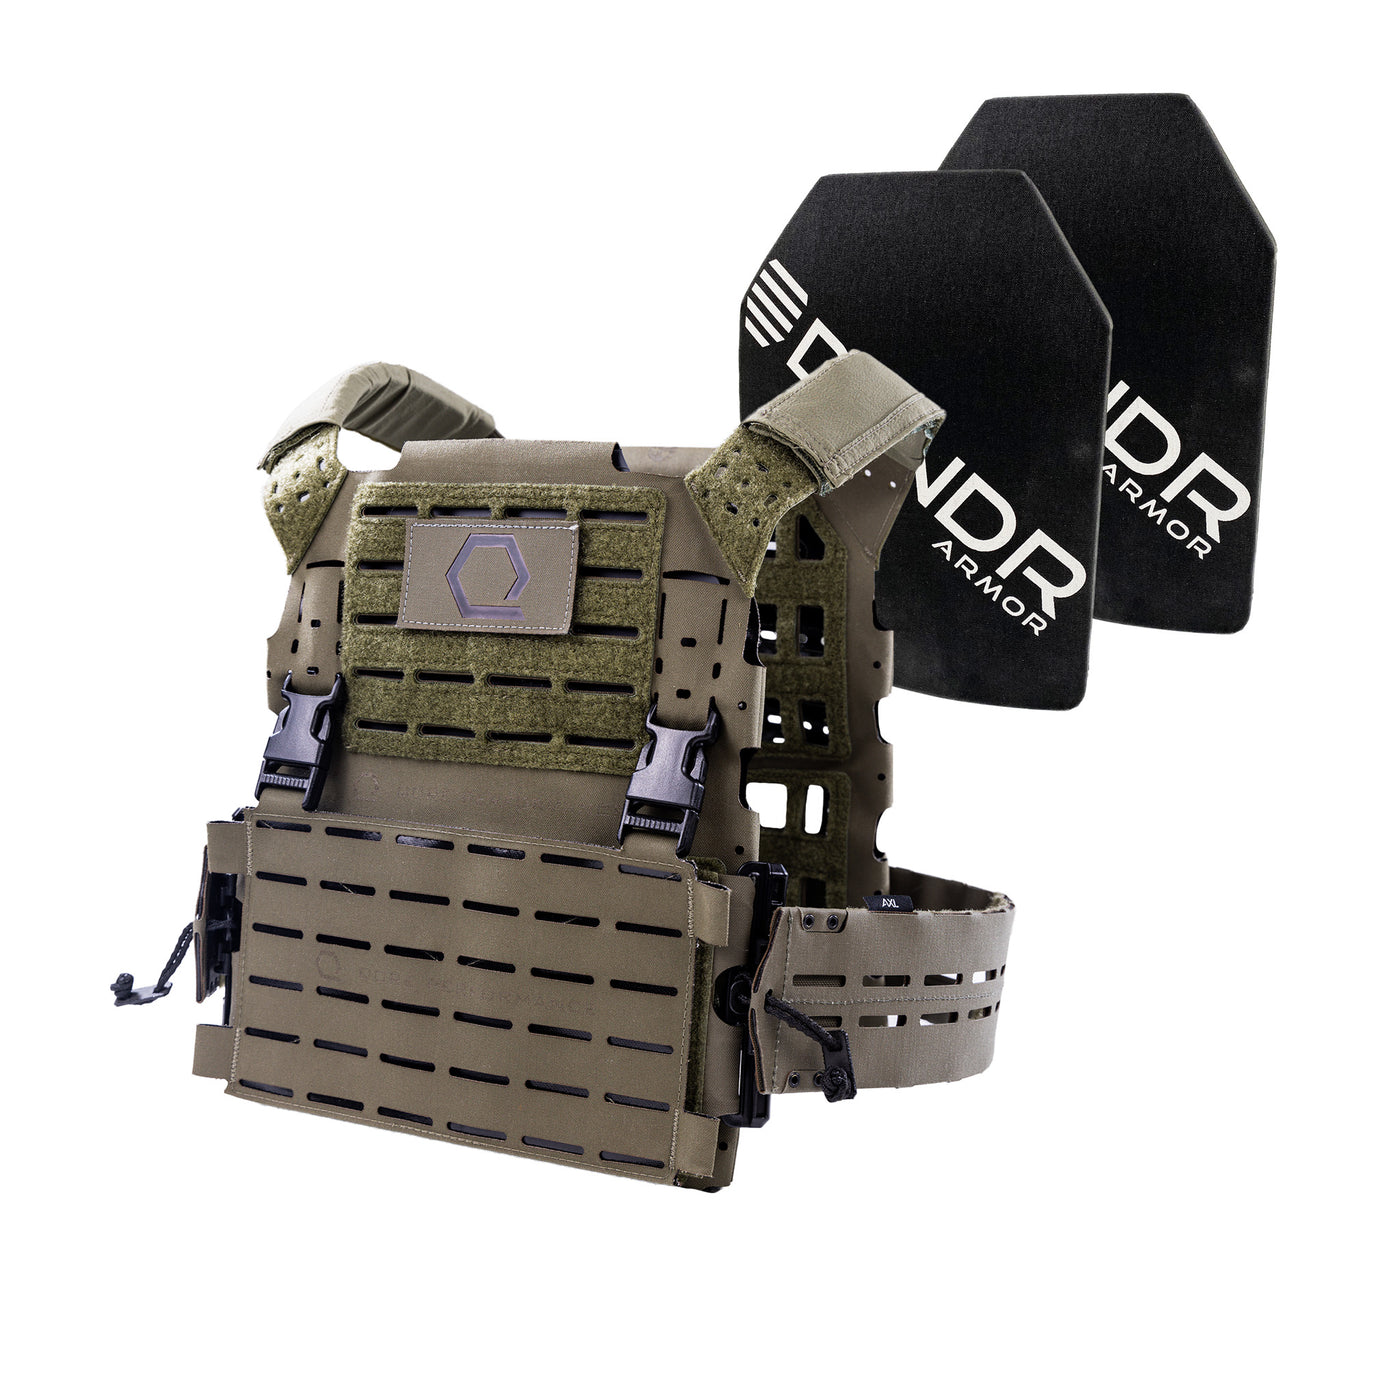 IcePlate EXO® DFNDR Level IV Armor Package (enthält 2 x DFNDR Armor Rifle Rated Hard Plates)